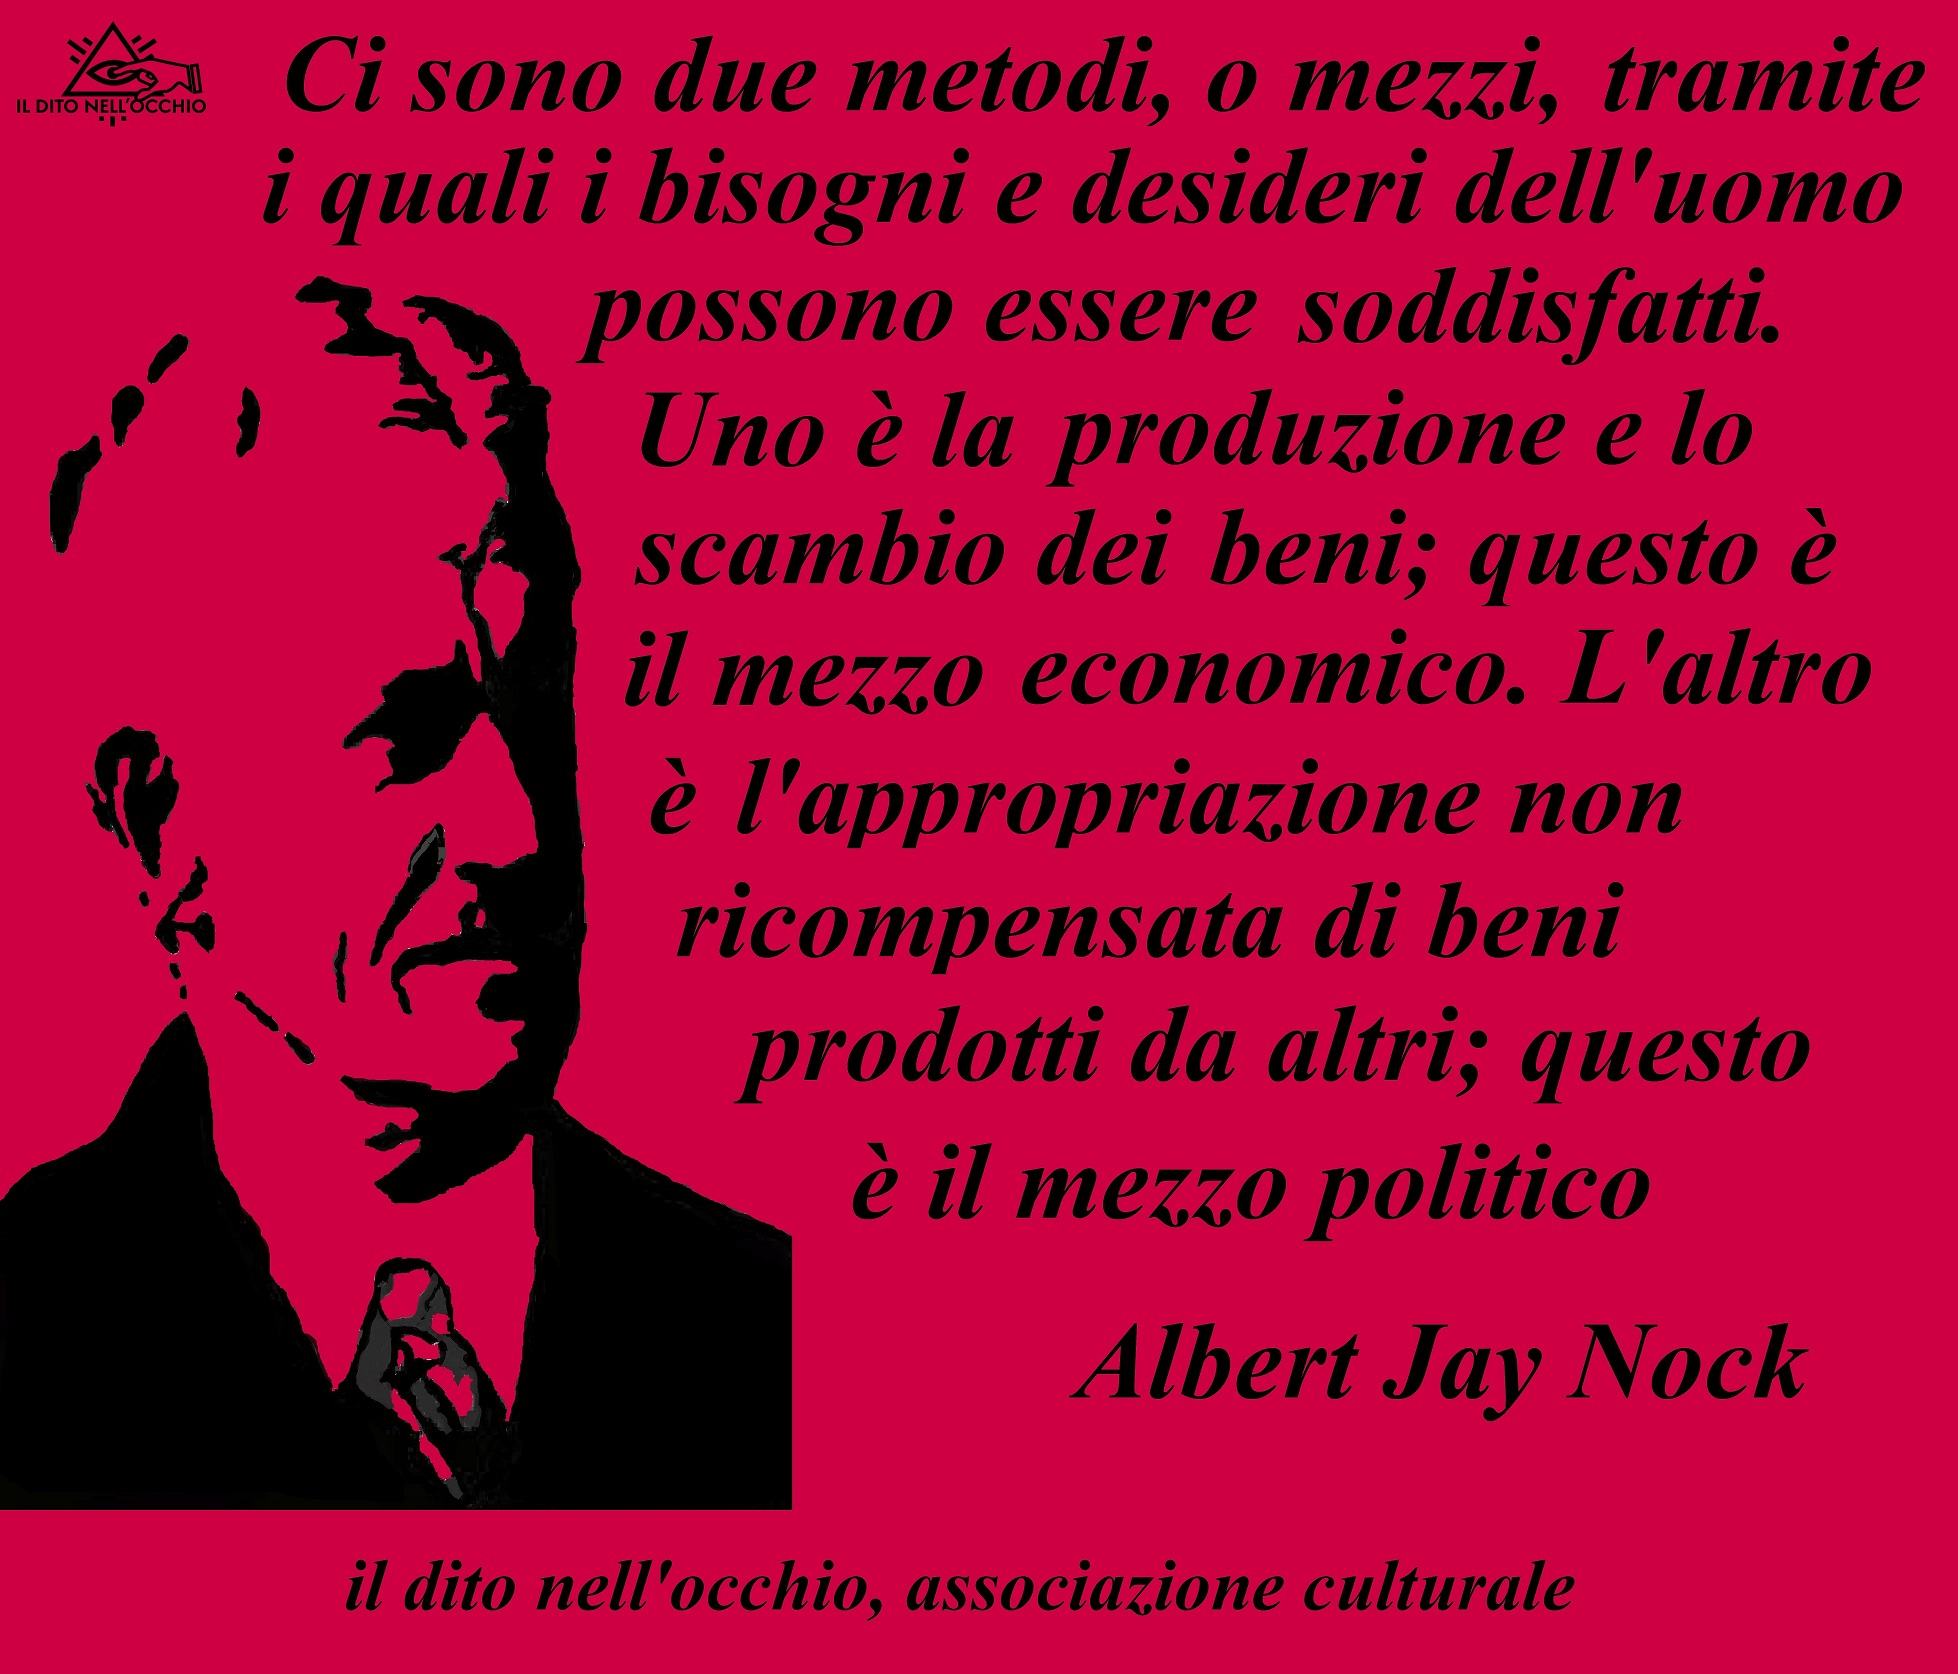 Albert Jay Nock